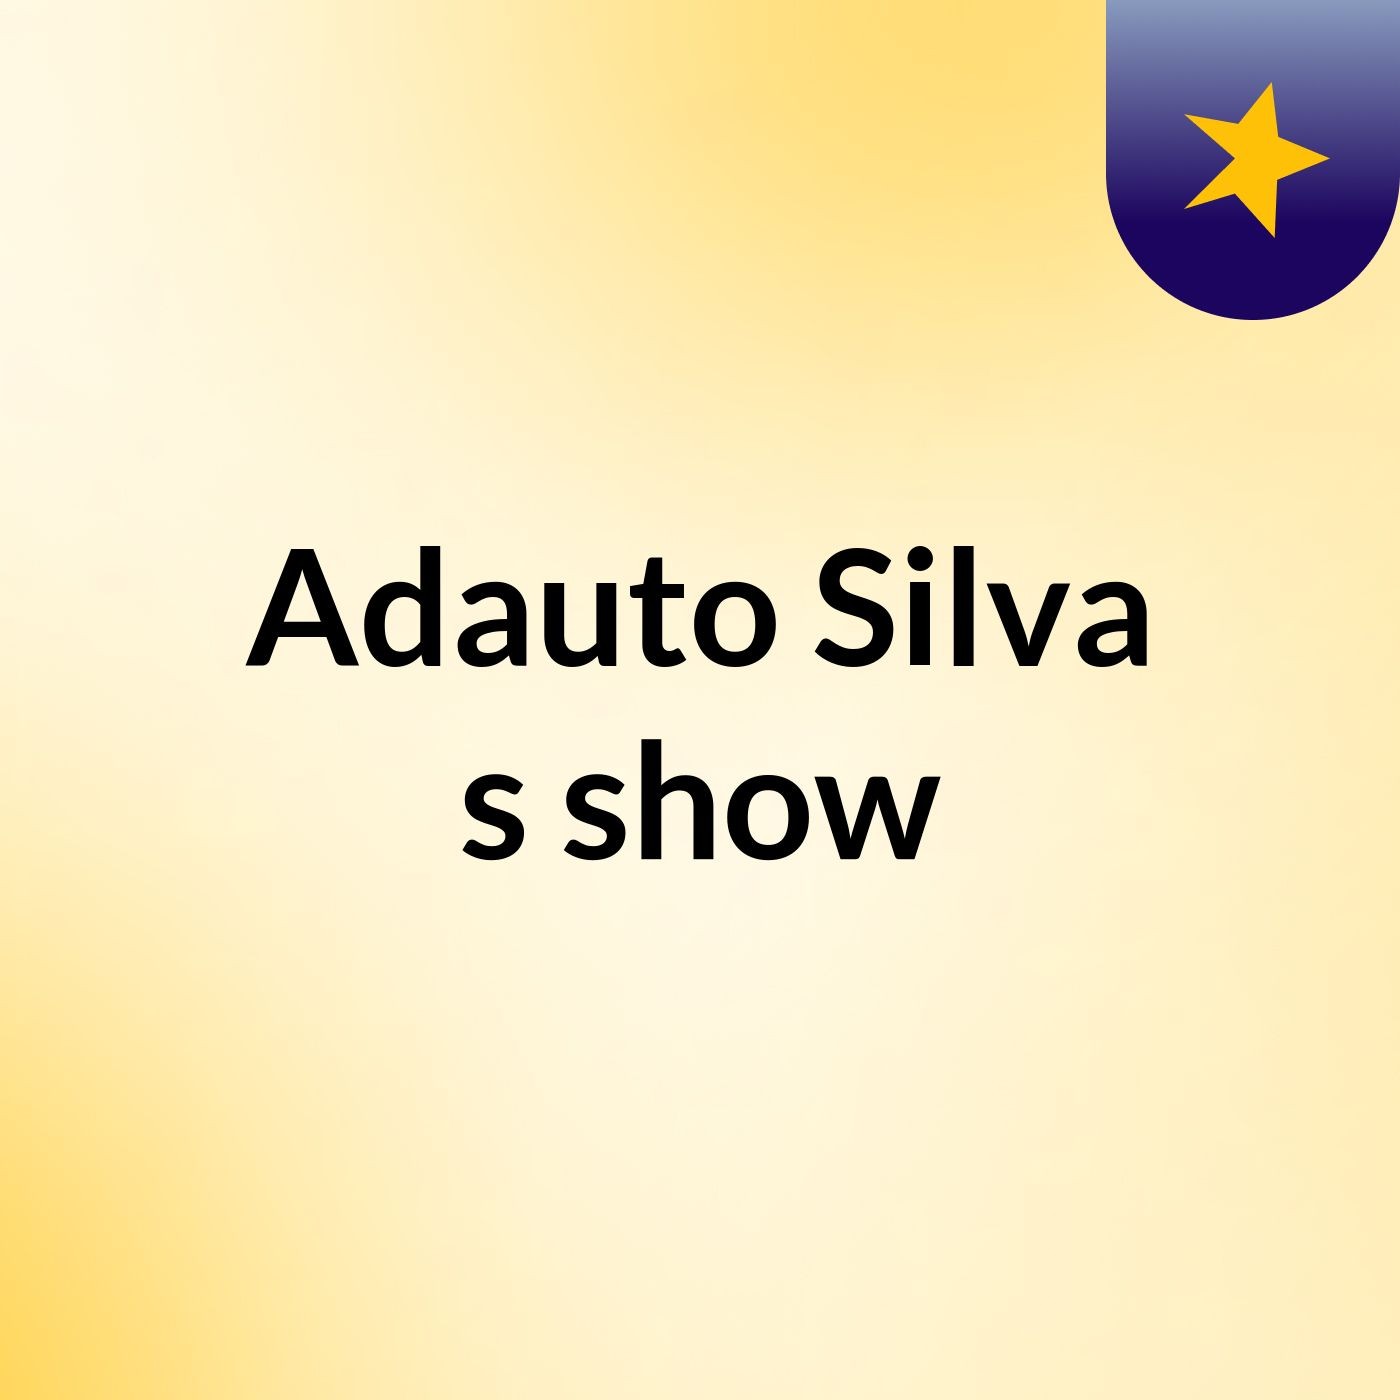 Adauto Silva's show